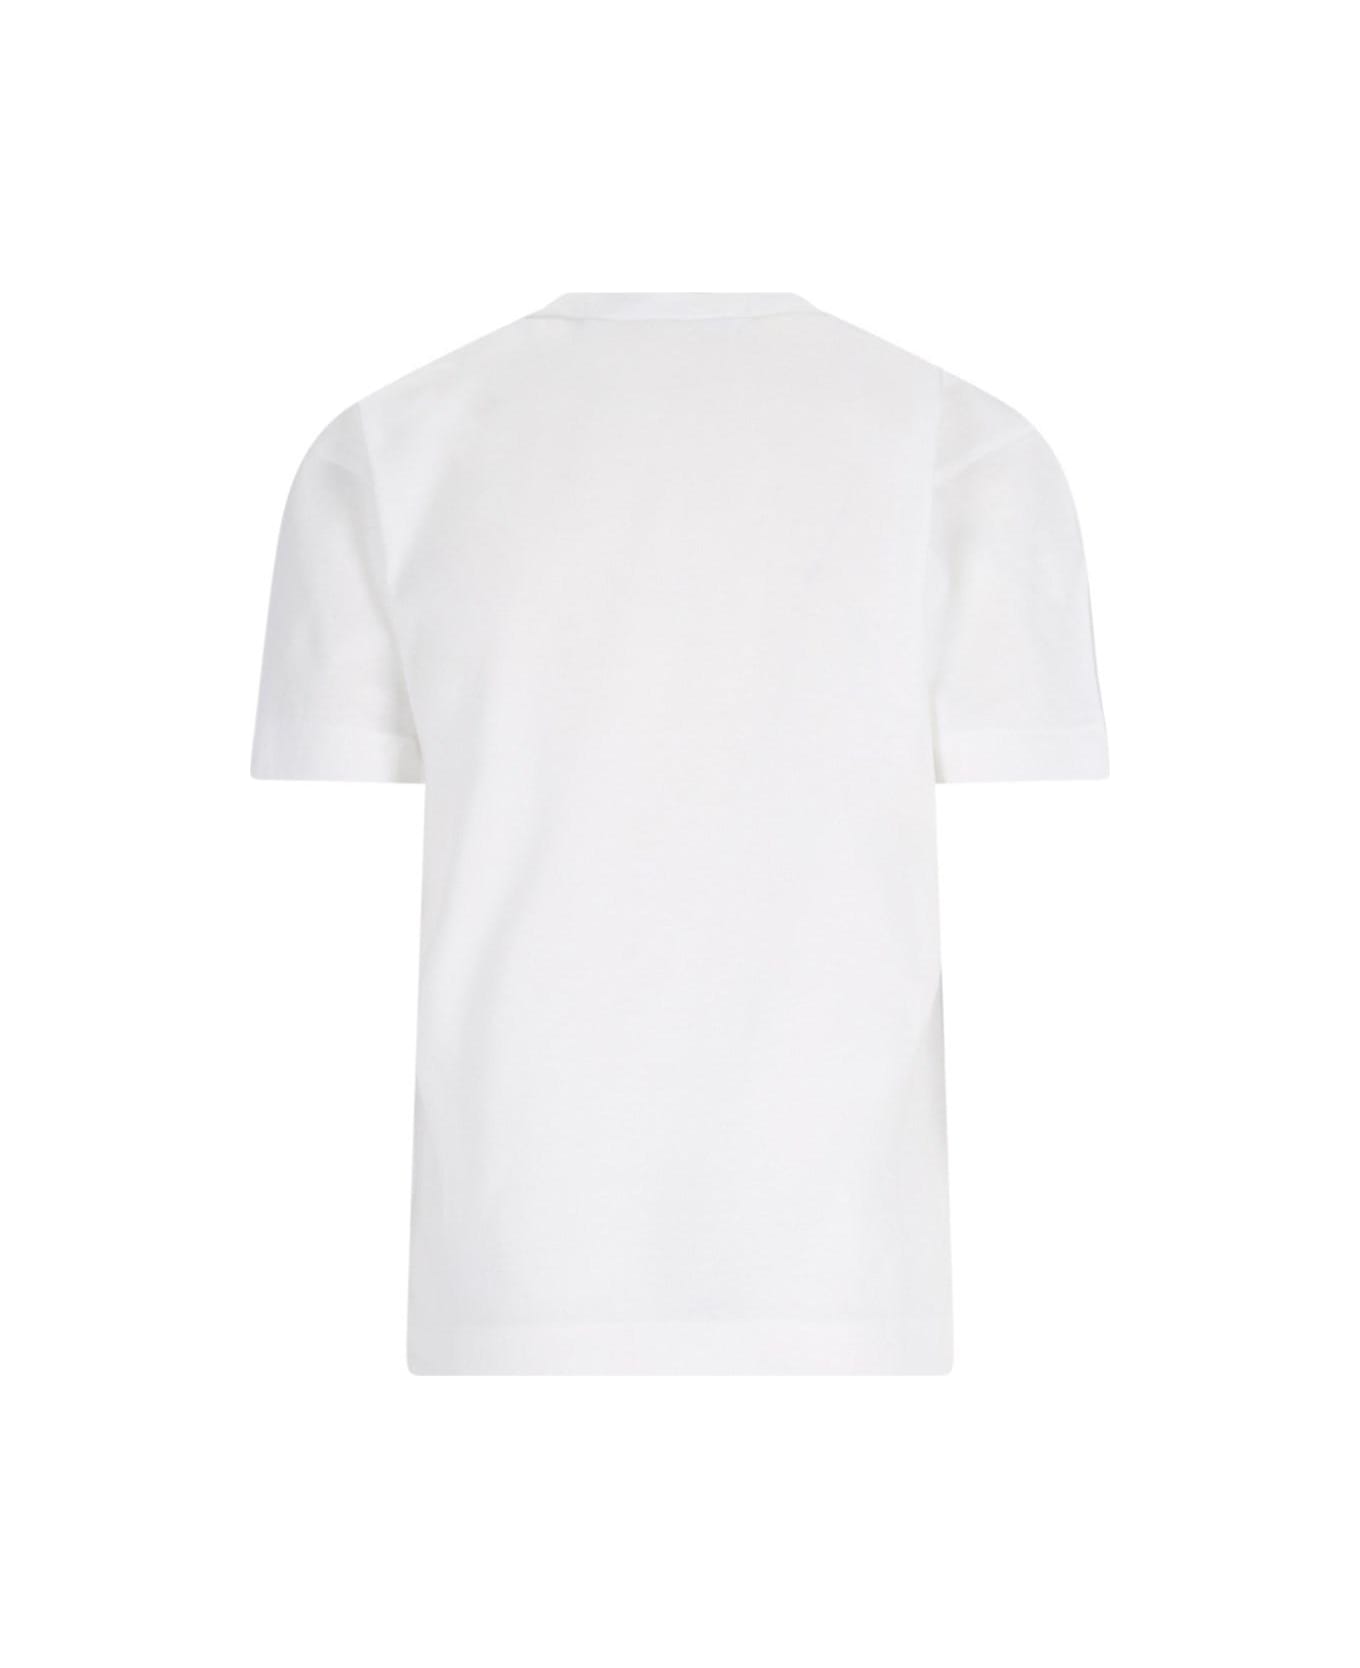 Comme des Garçons Play Logo T-shirt - White